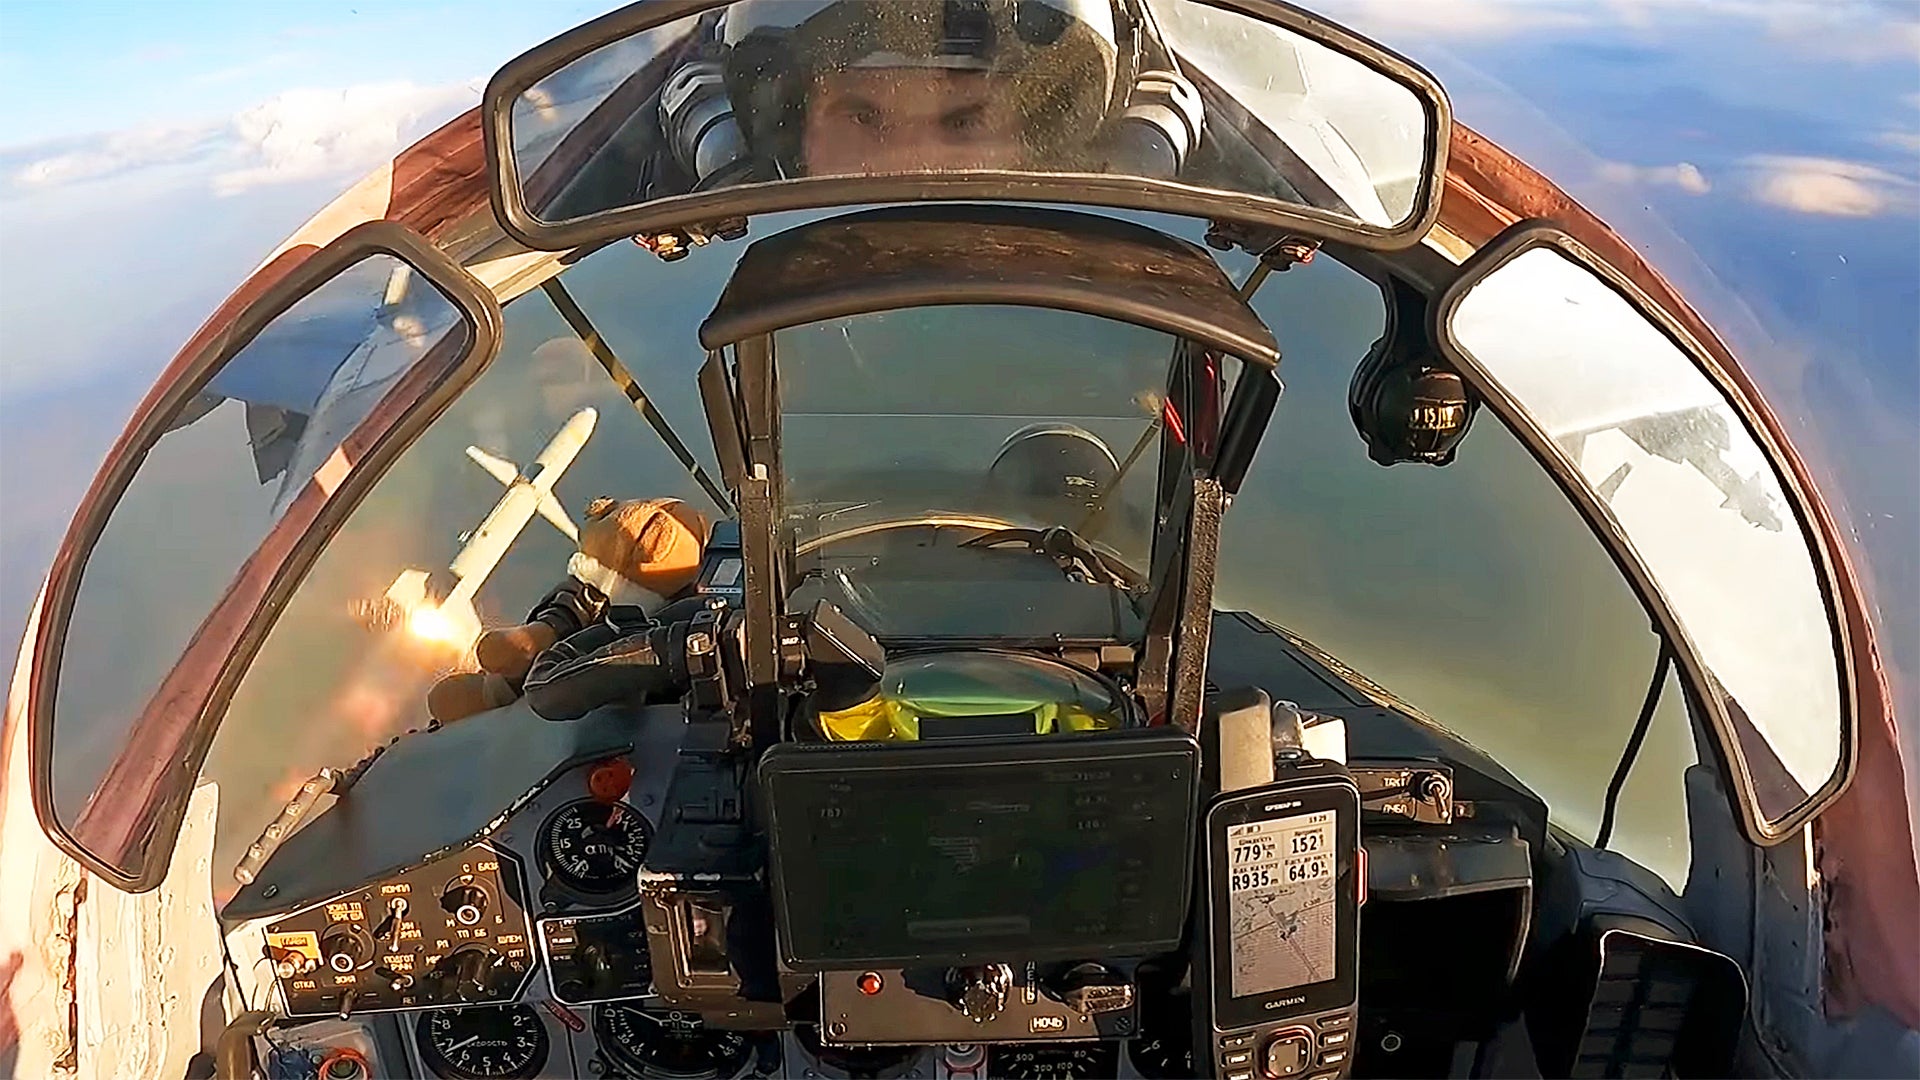 Ukraine’s MiG-29s Shown Firing U.S. AGM-88 Missiles In Stunning Cockpit .